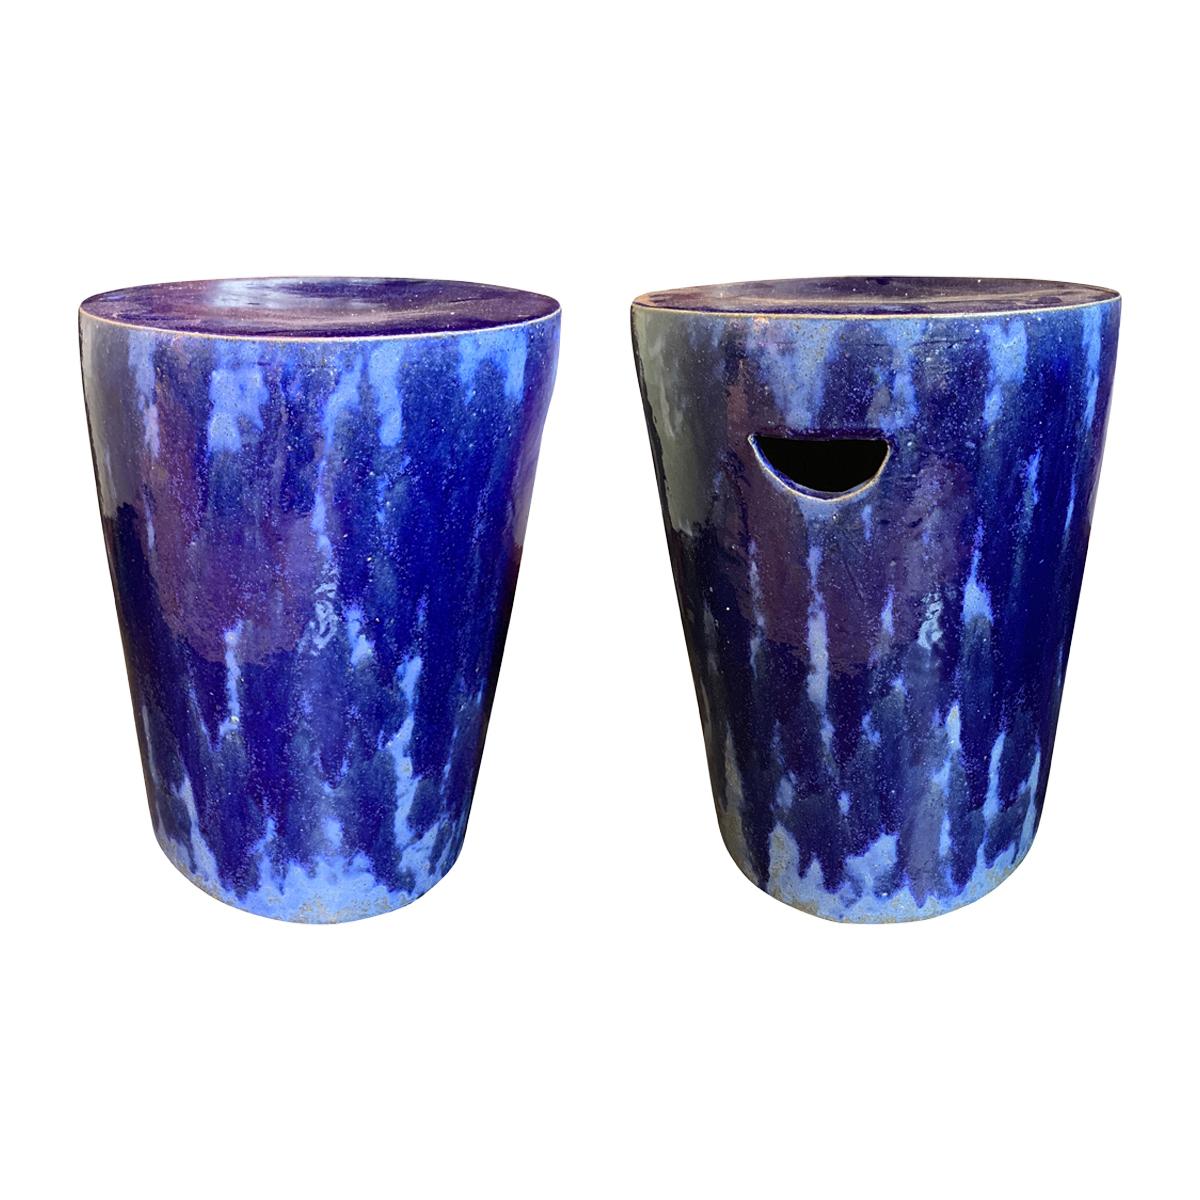 Pair of Blue Ceramic Glazed Round Garden Stools, China, Contemporary